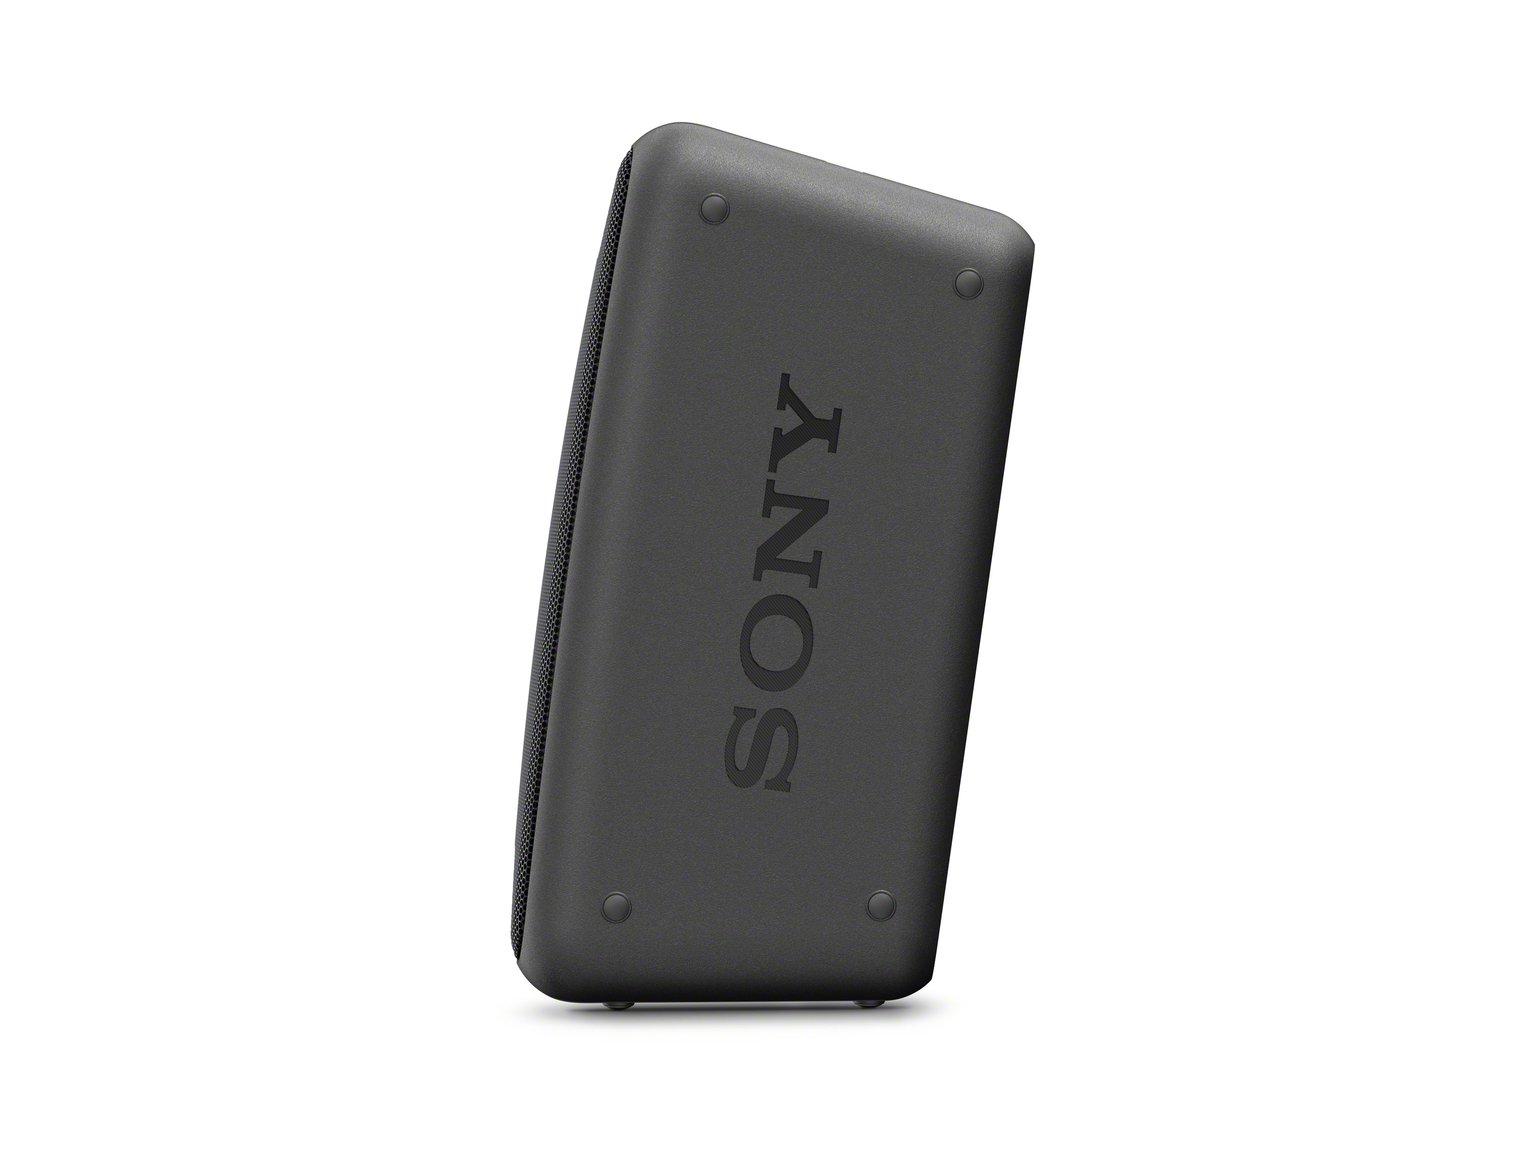 Sony GTK-XB90 Bluetooth High Power Speaker Review